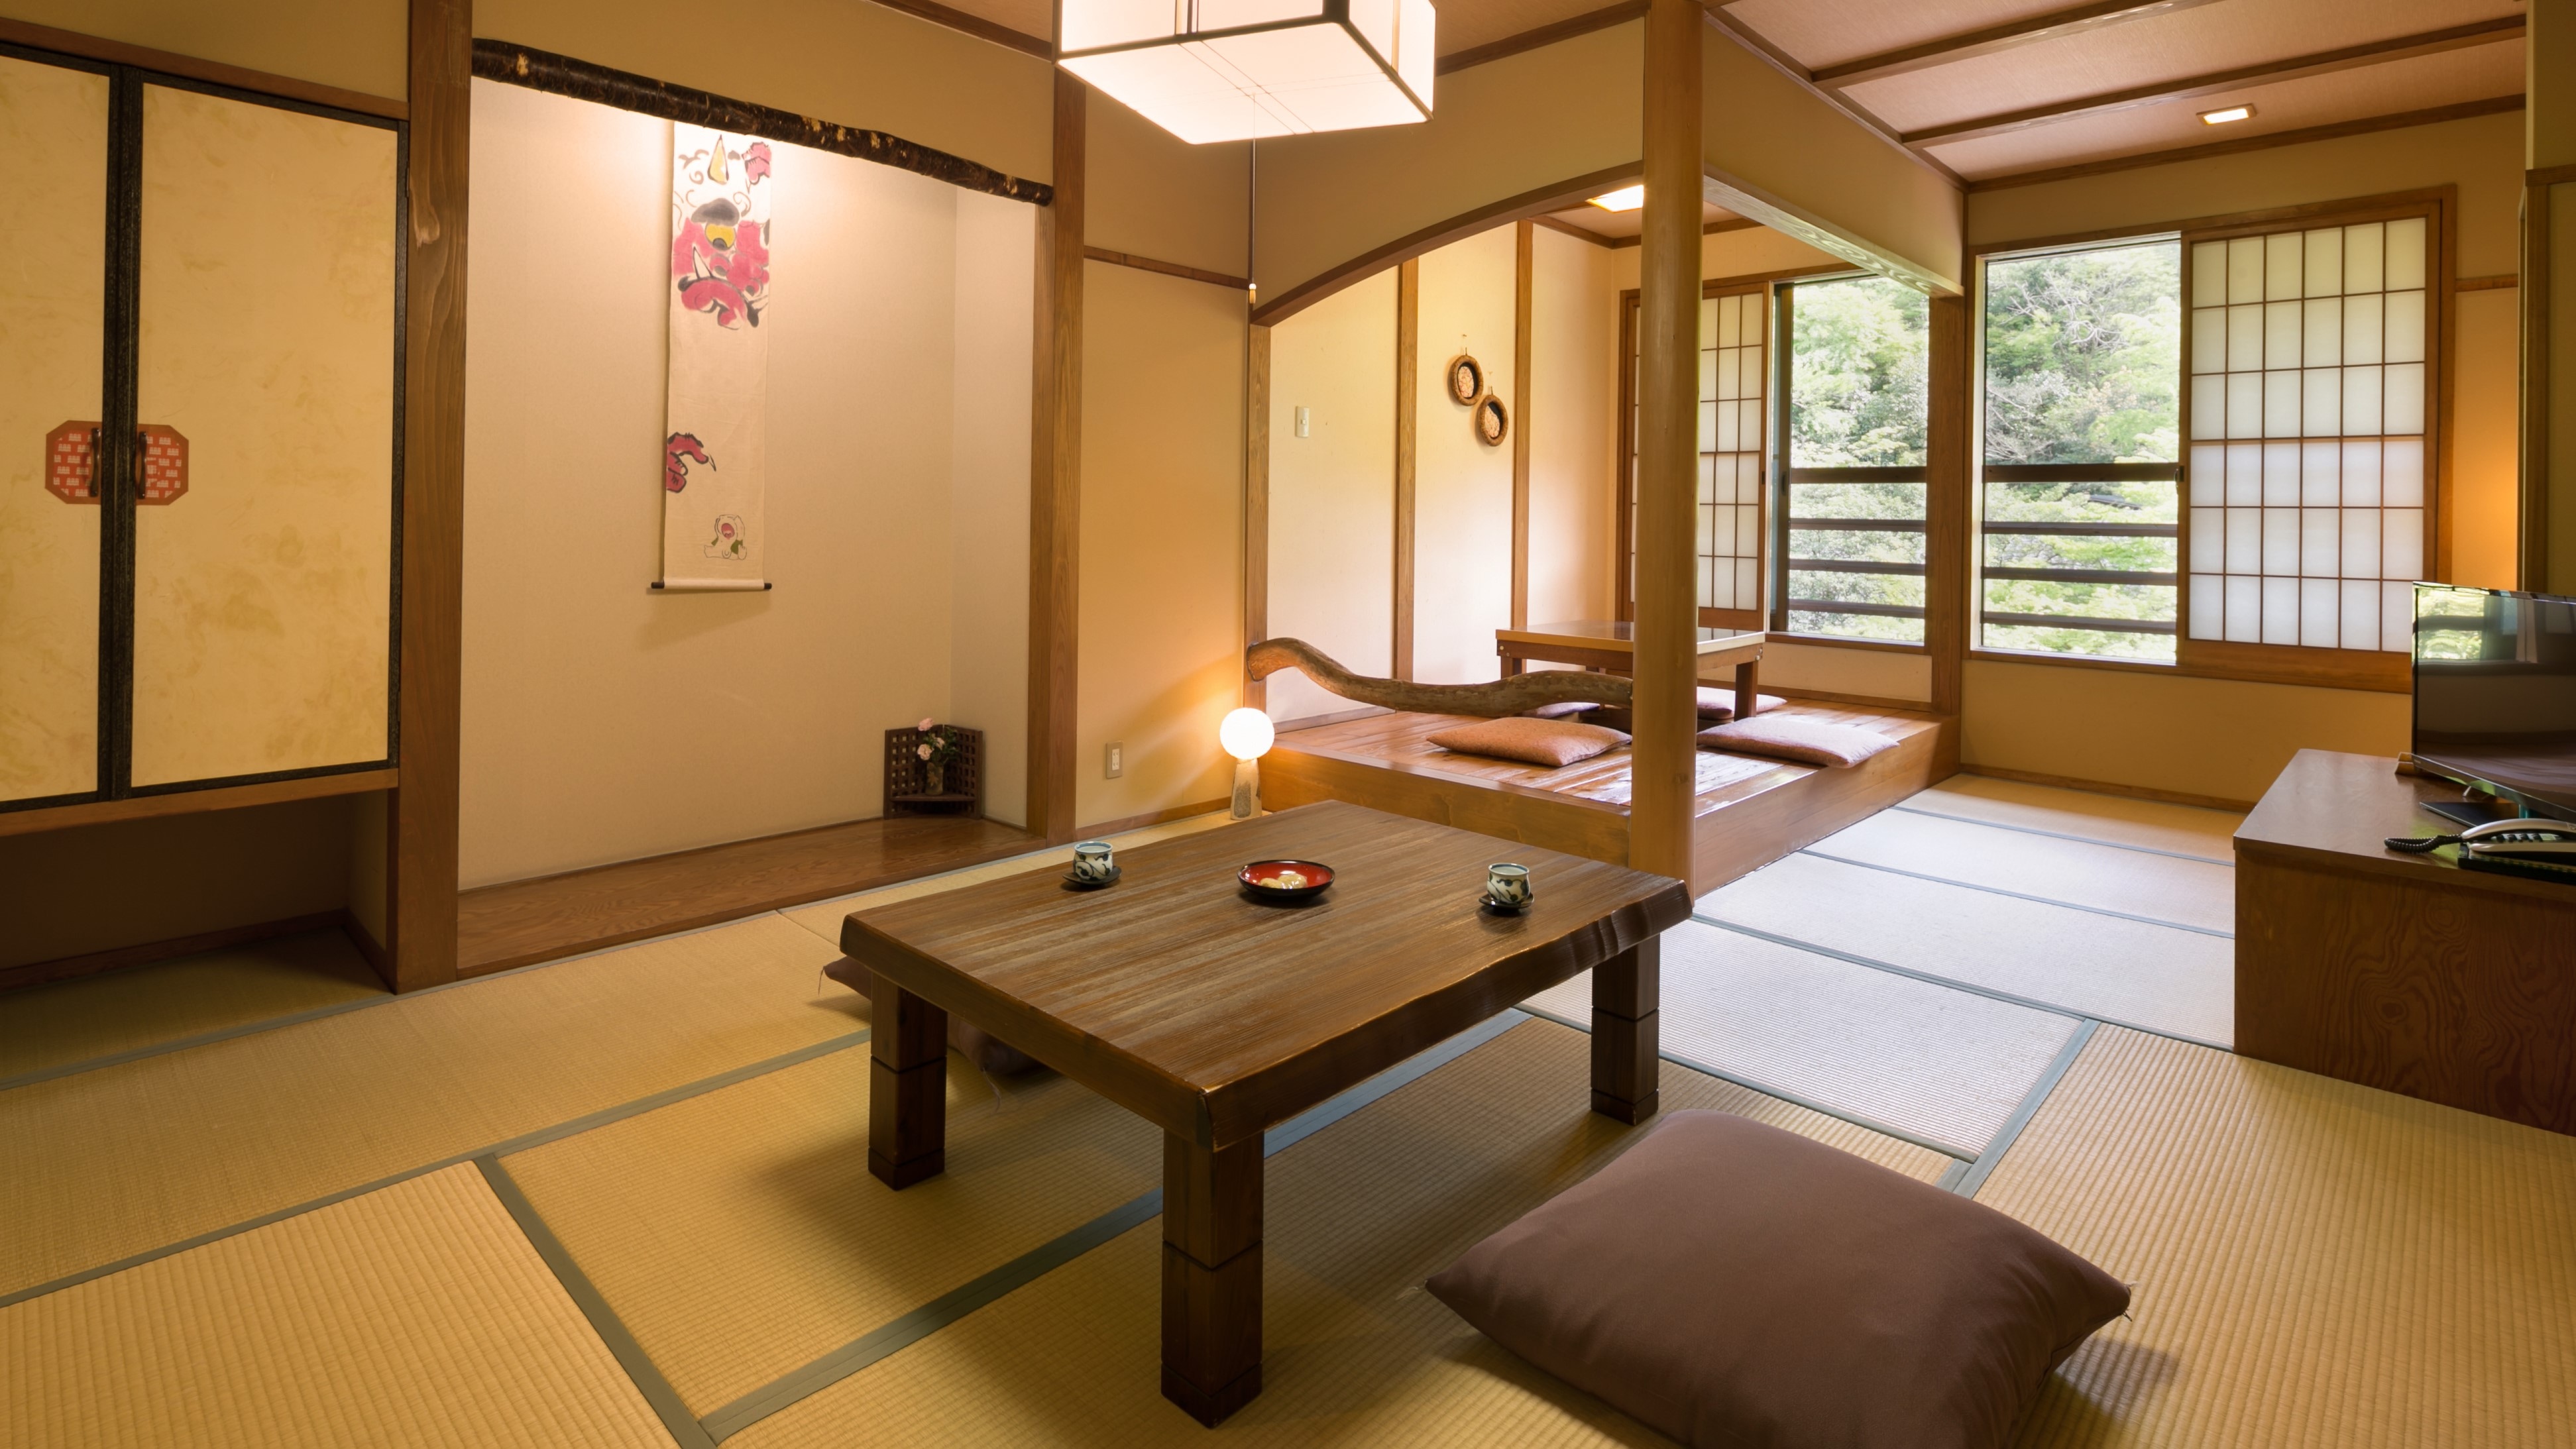 Contoh kamar bergaya Jepang dengan 8 tikar tatami. Tipe ini memiliki 3 kamar.